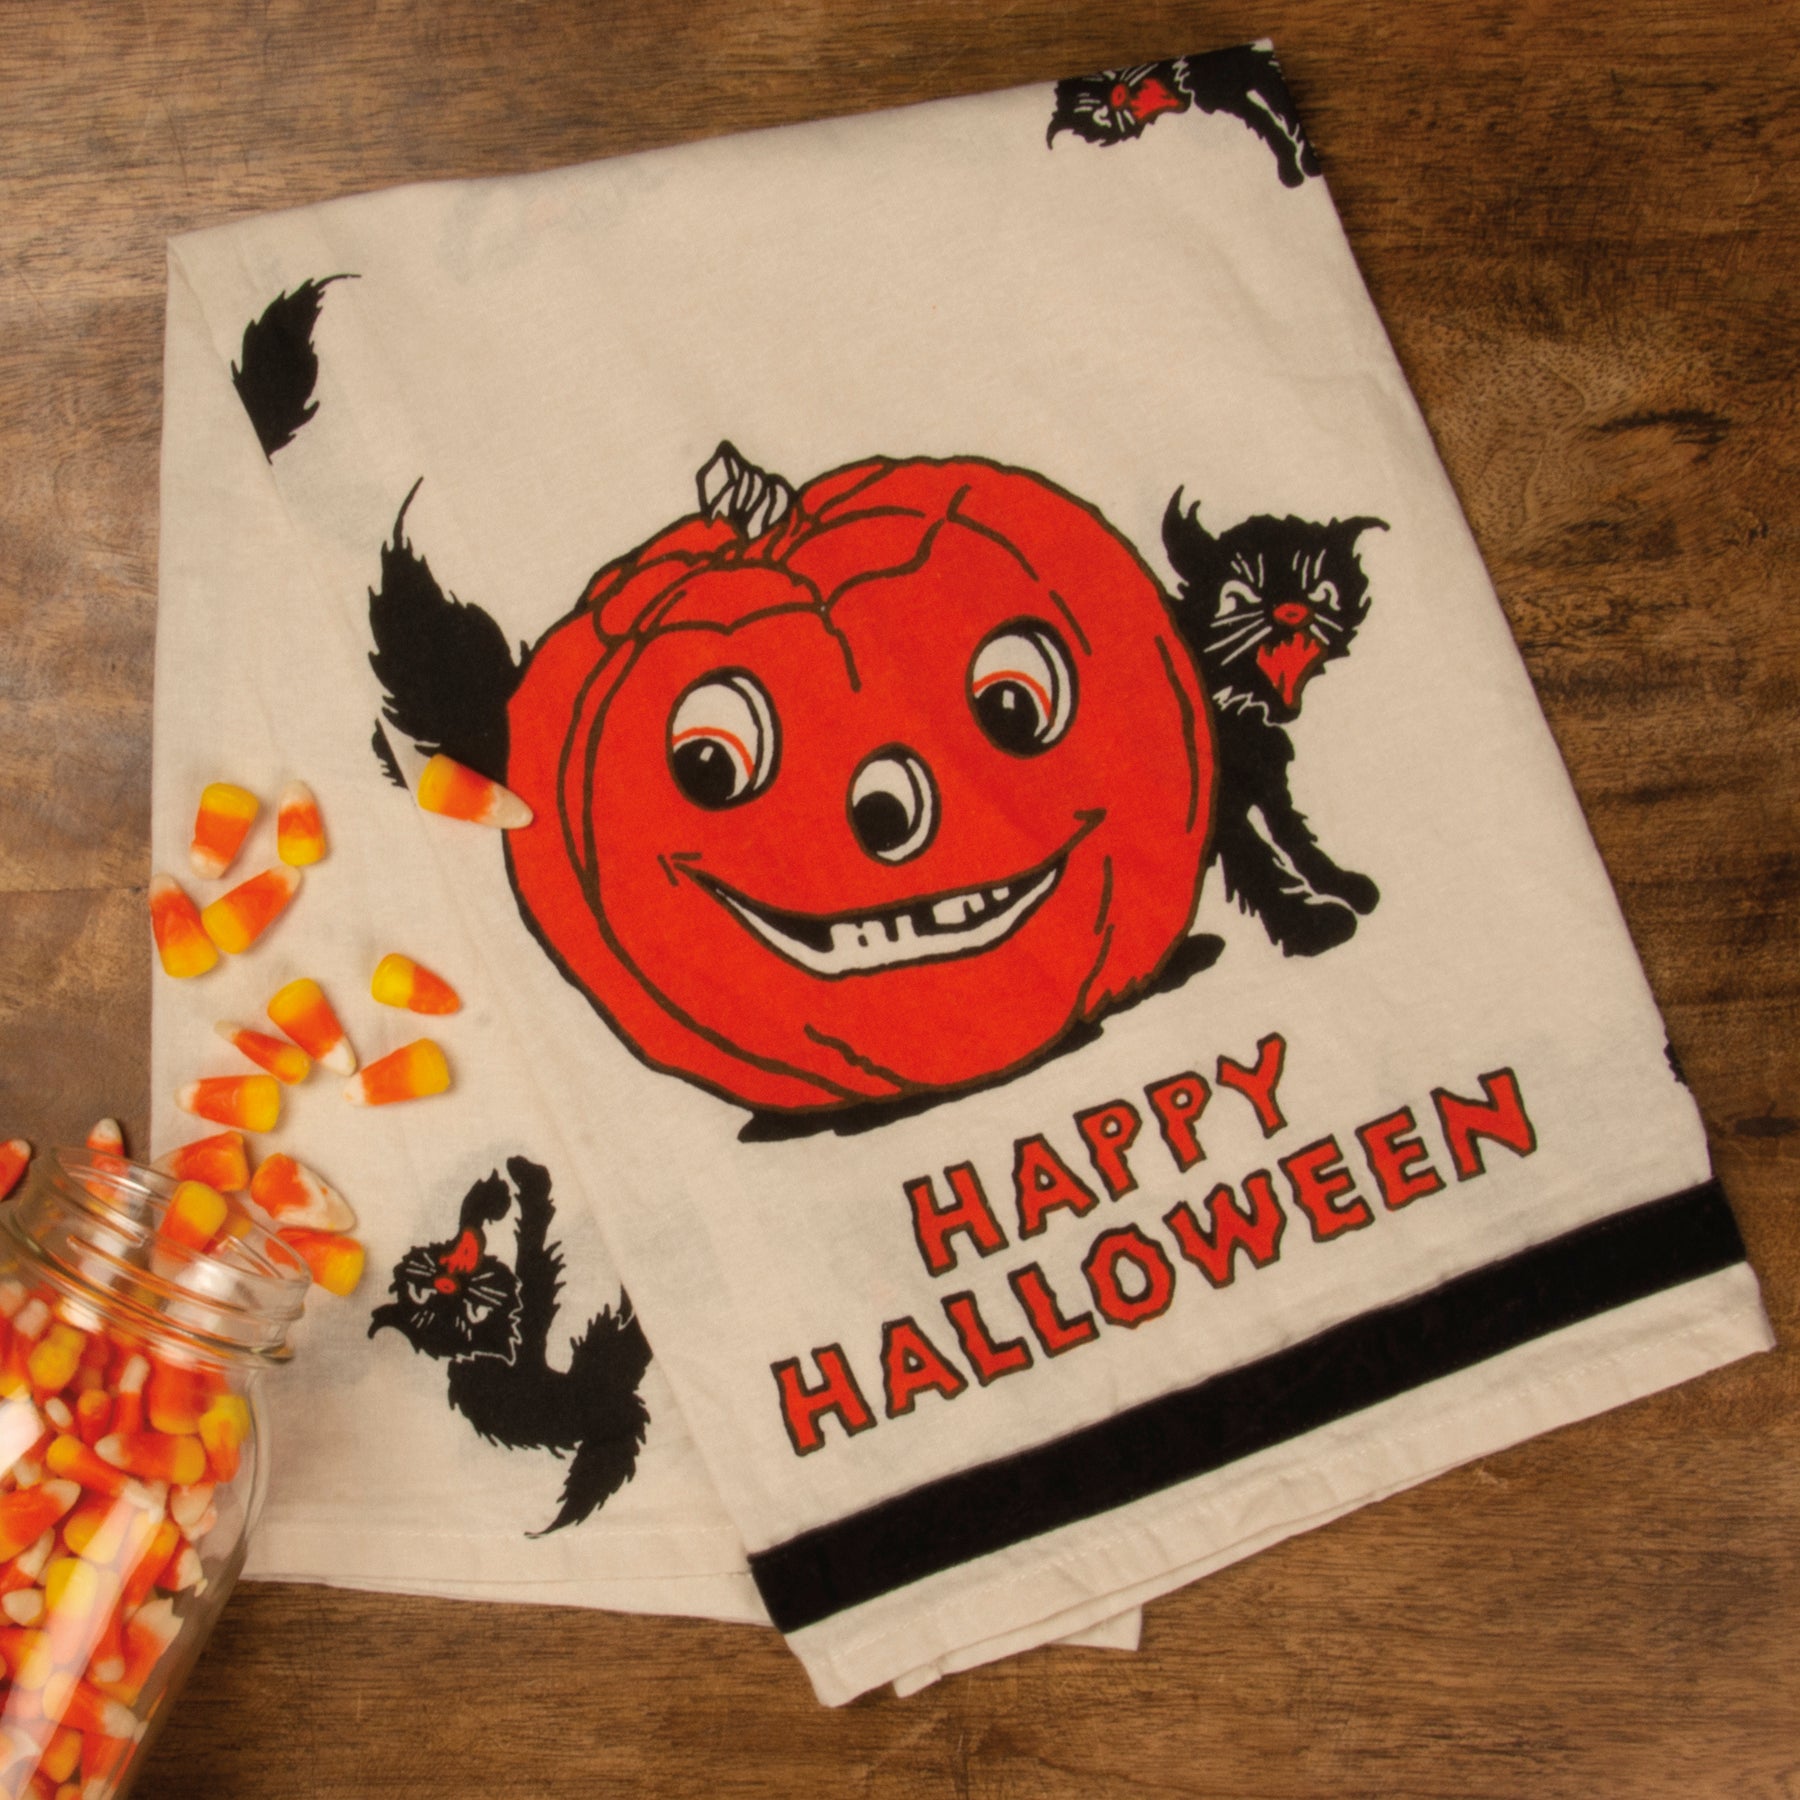 Vintage Styled "Happy Halloween " Kitchen Towel